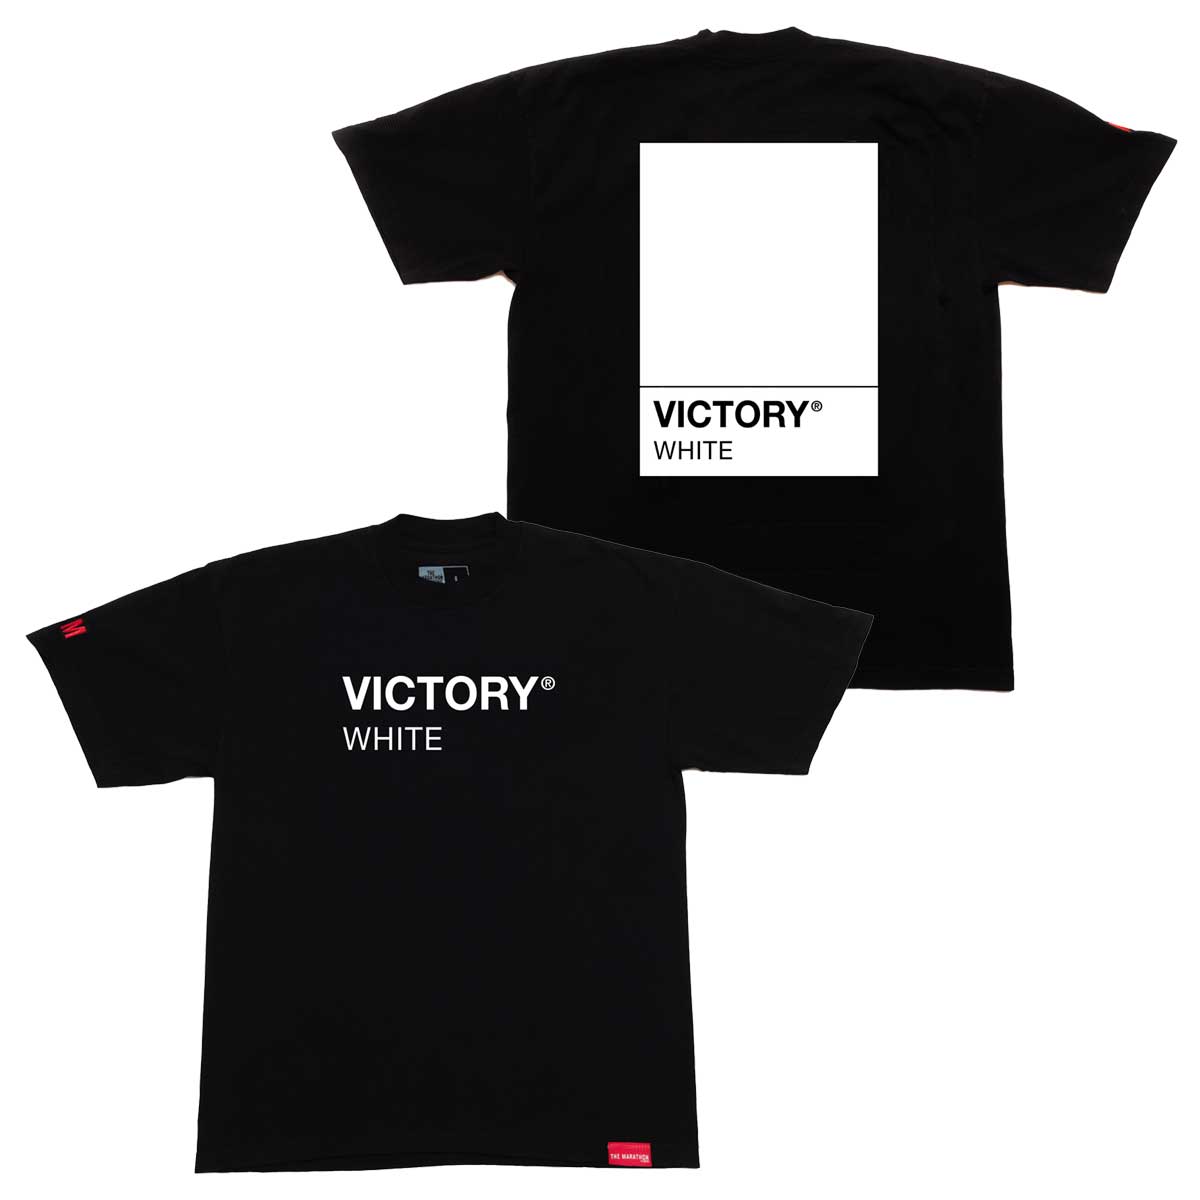 Victory White Pantone T-shirt - Black